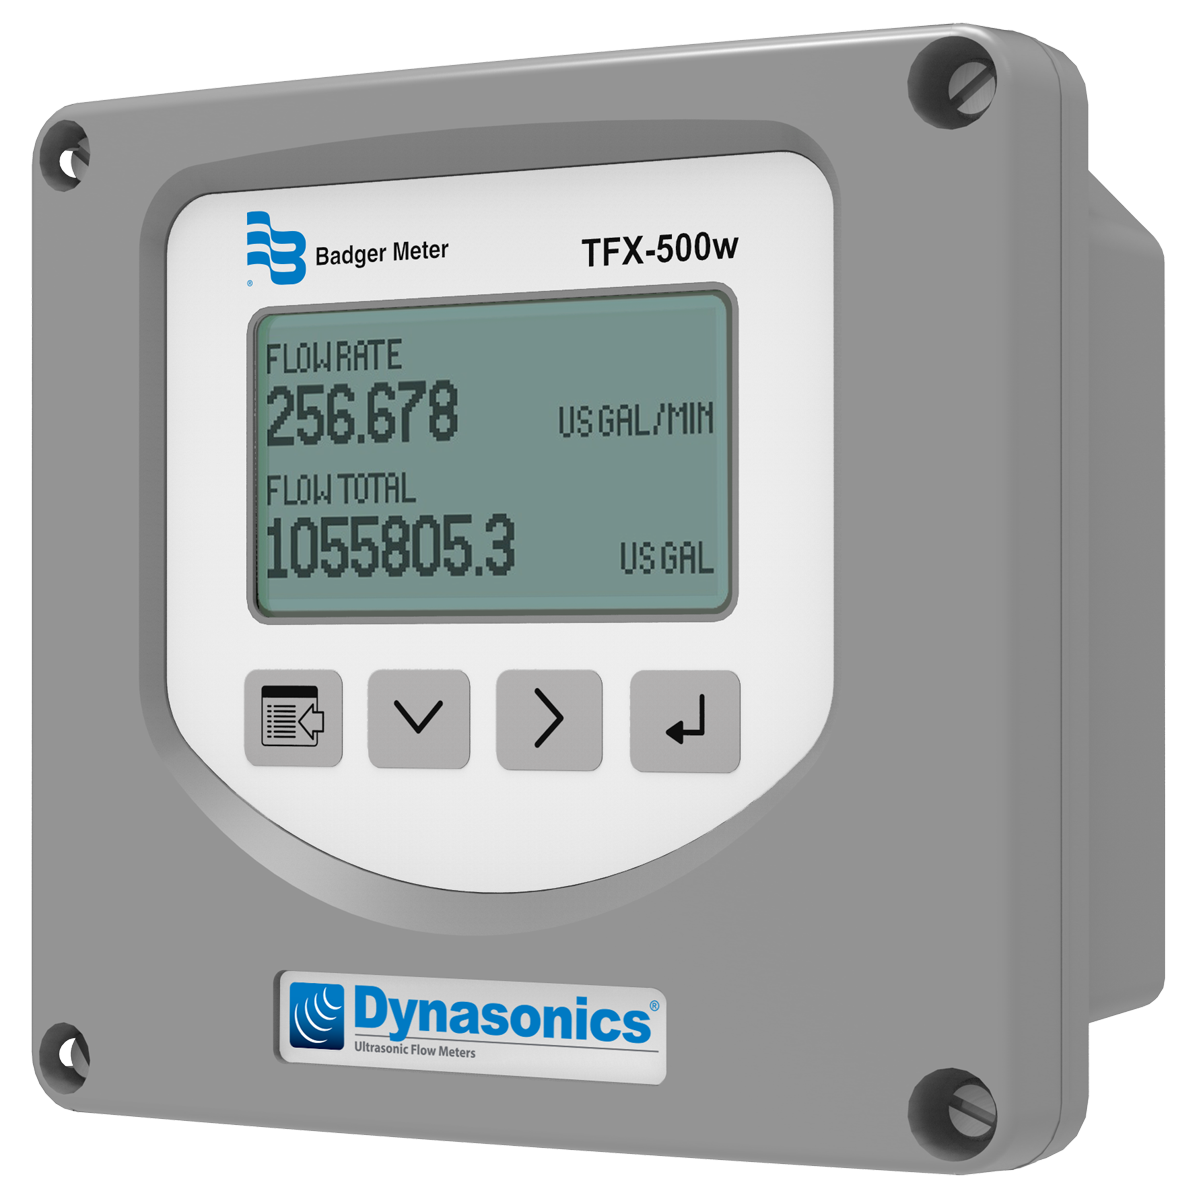 TFX-500W Transit Time Ultrasonic Flowmeter